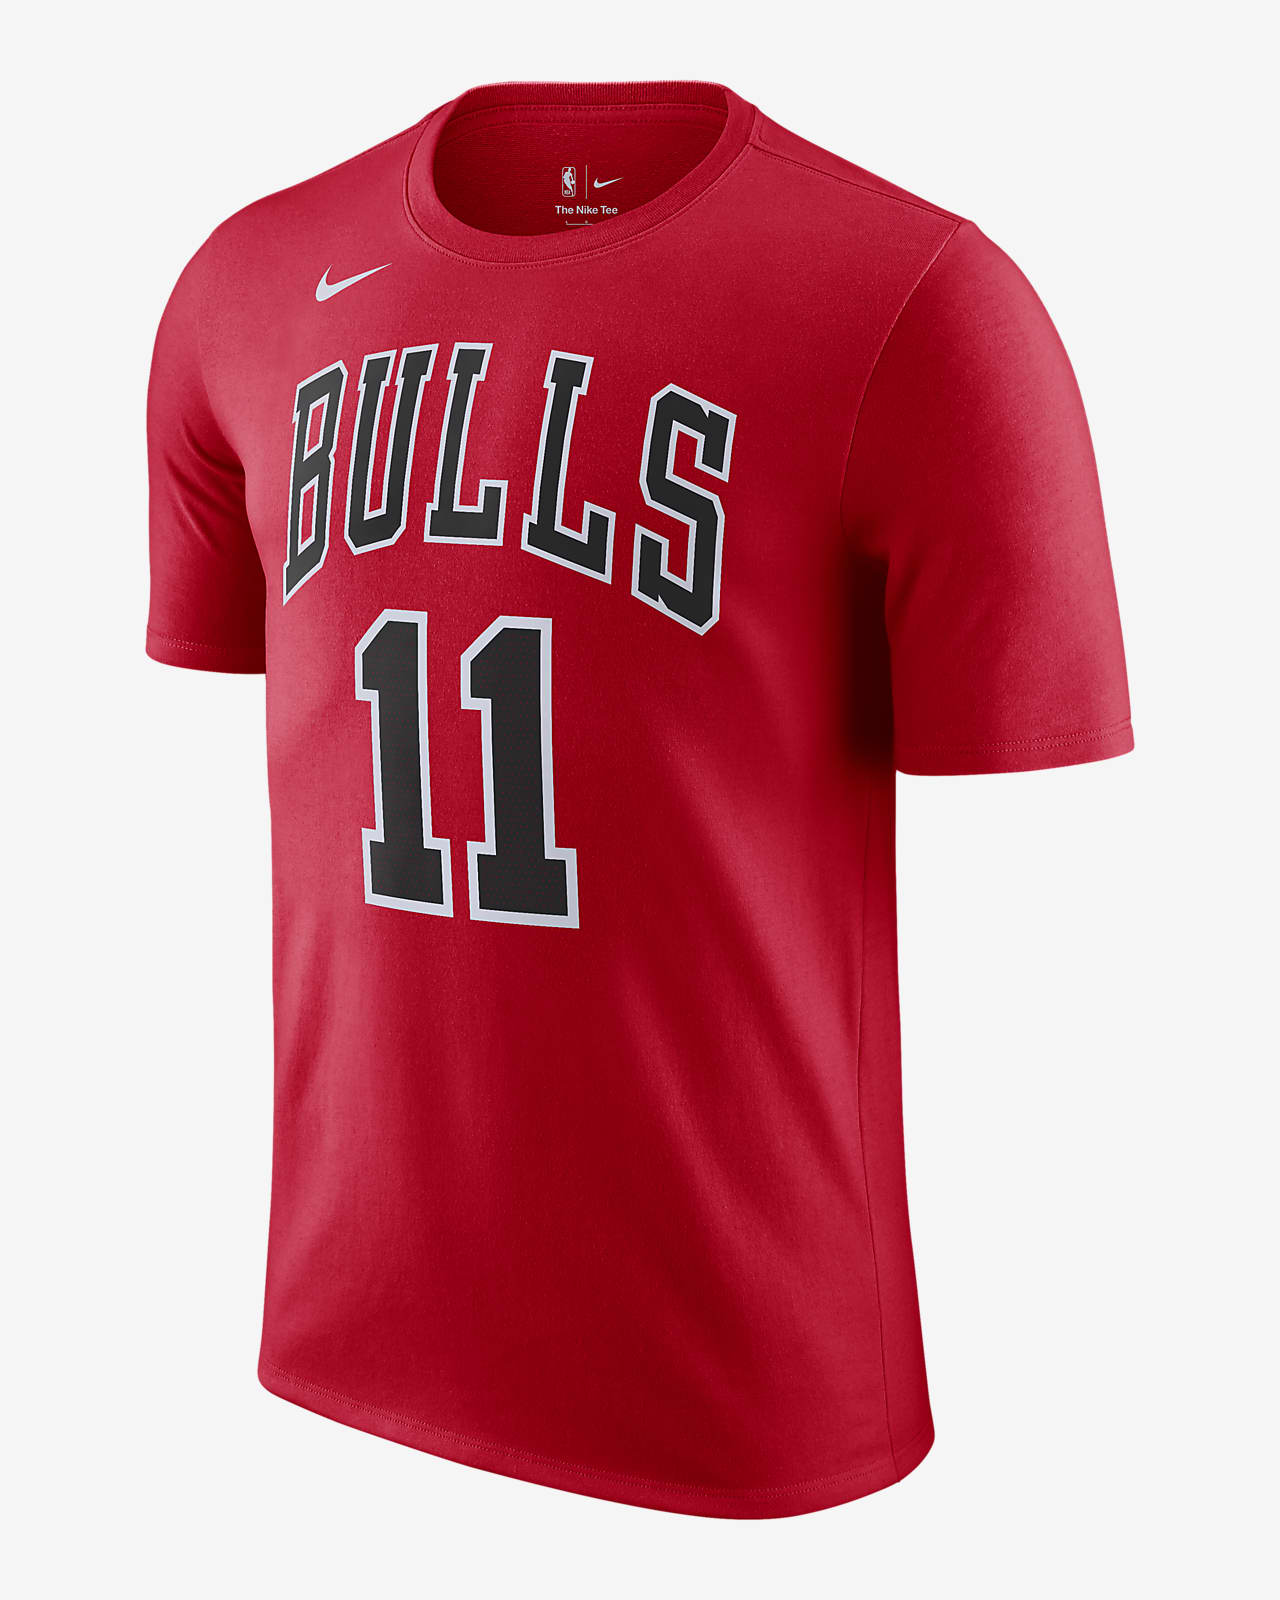 Tee-shirt Nike NBA Chicago Bulls pour Homme